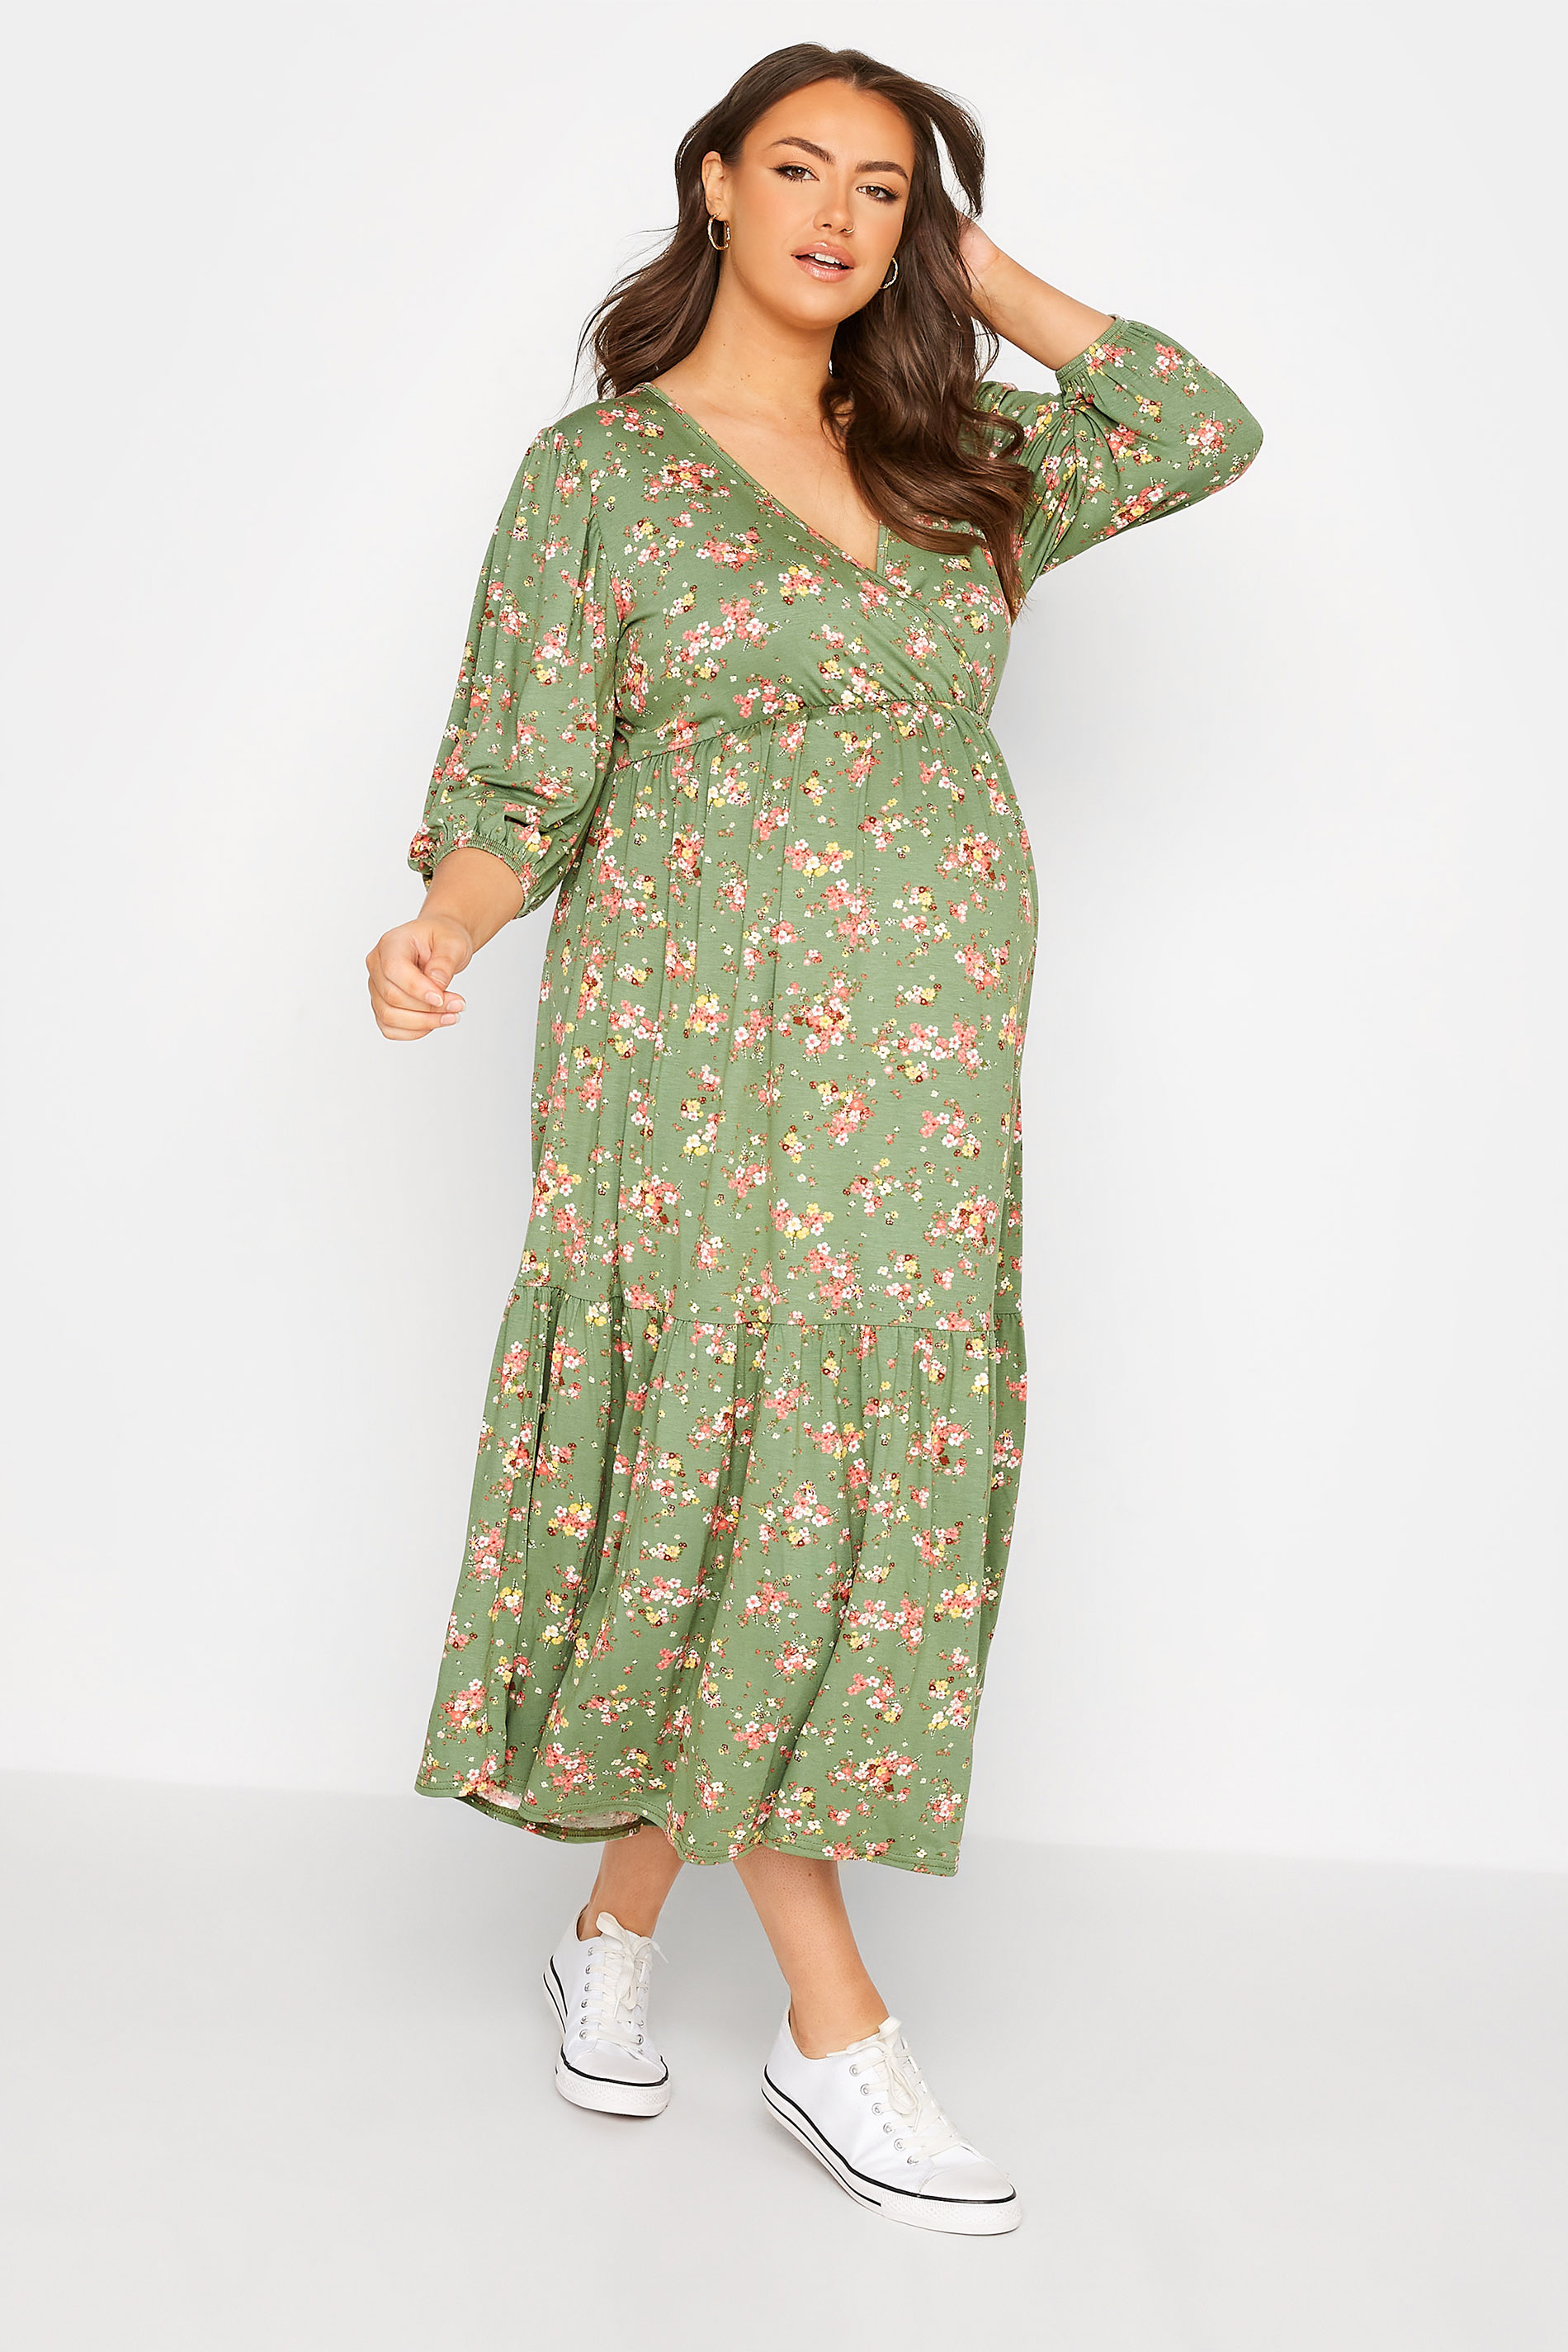 Grande taille  Vêtements de Grossesse Grande taille  Robe de grossesse | BUMP IT UP MATERNITY Curve Green Floral Print Tiered Wrap Dress - EX81641